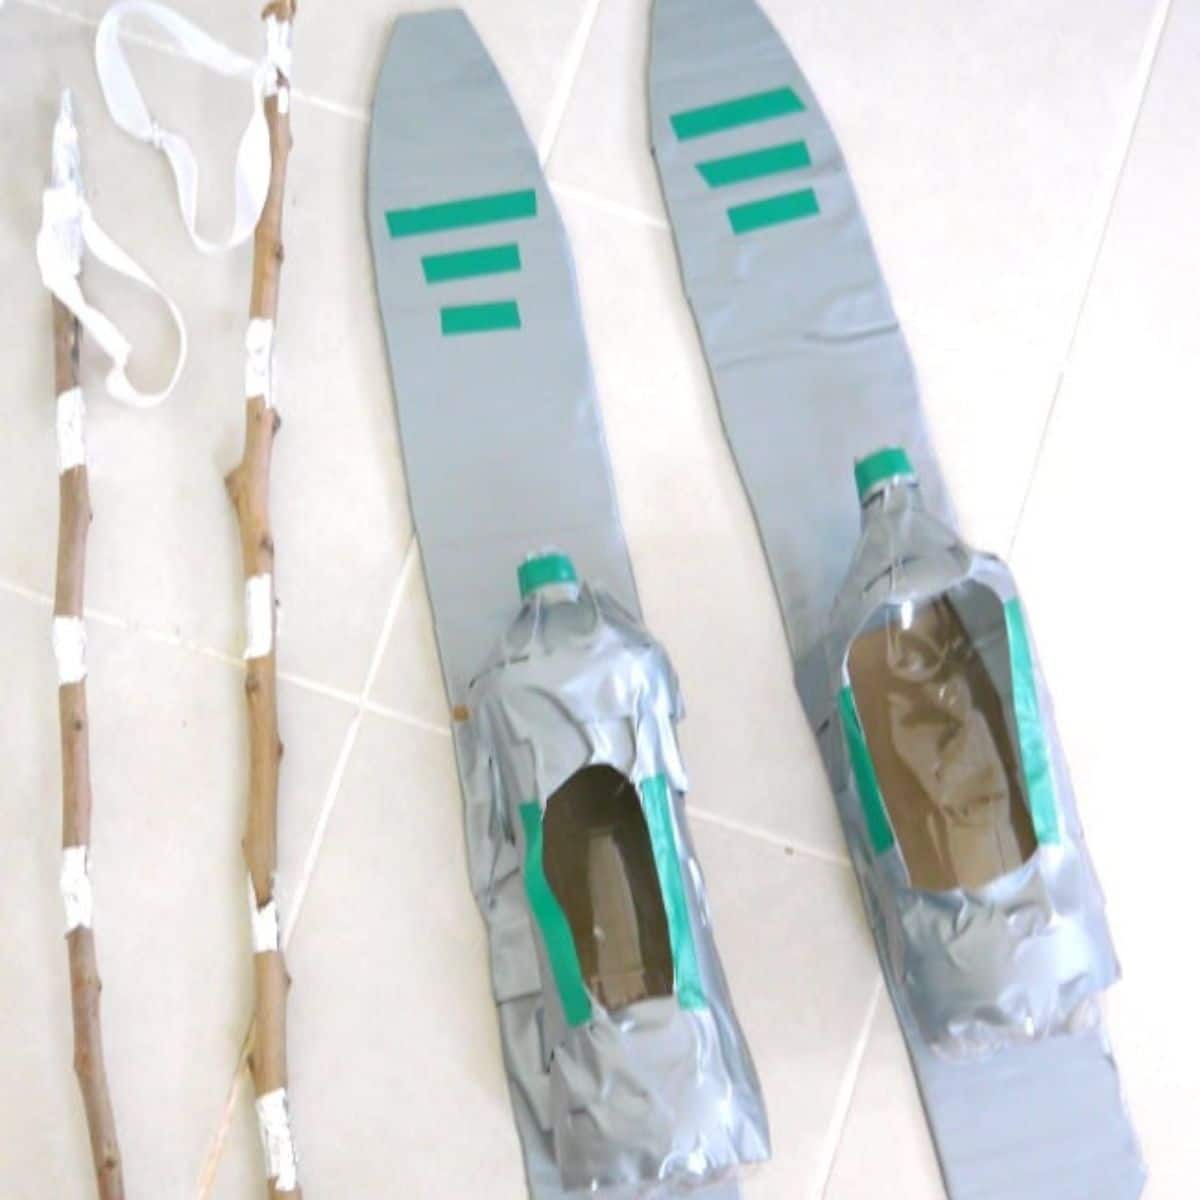 Homemade cardboard skis.